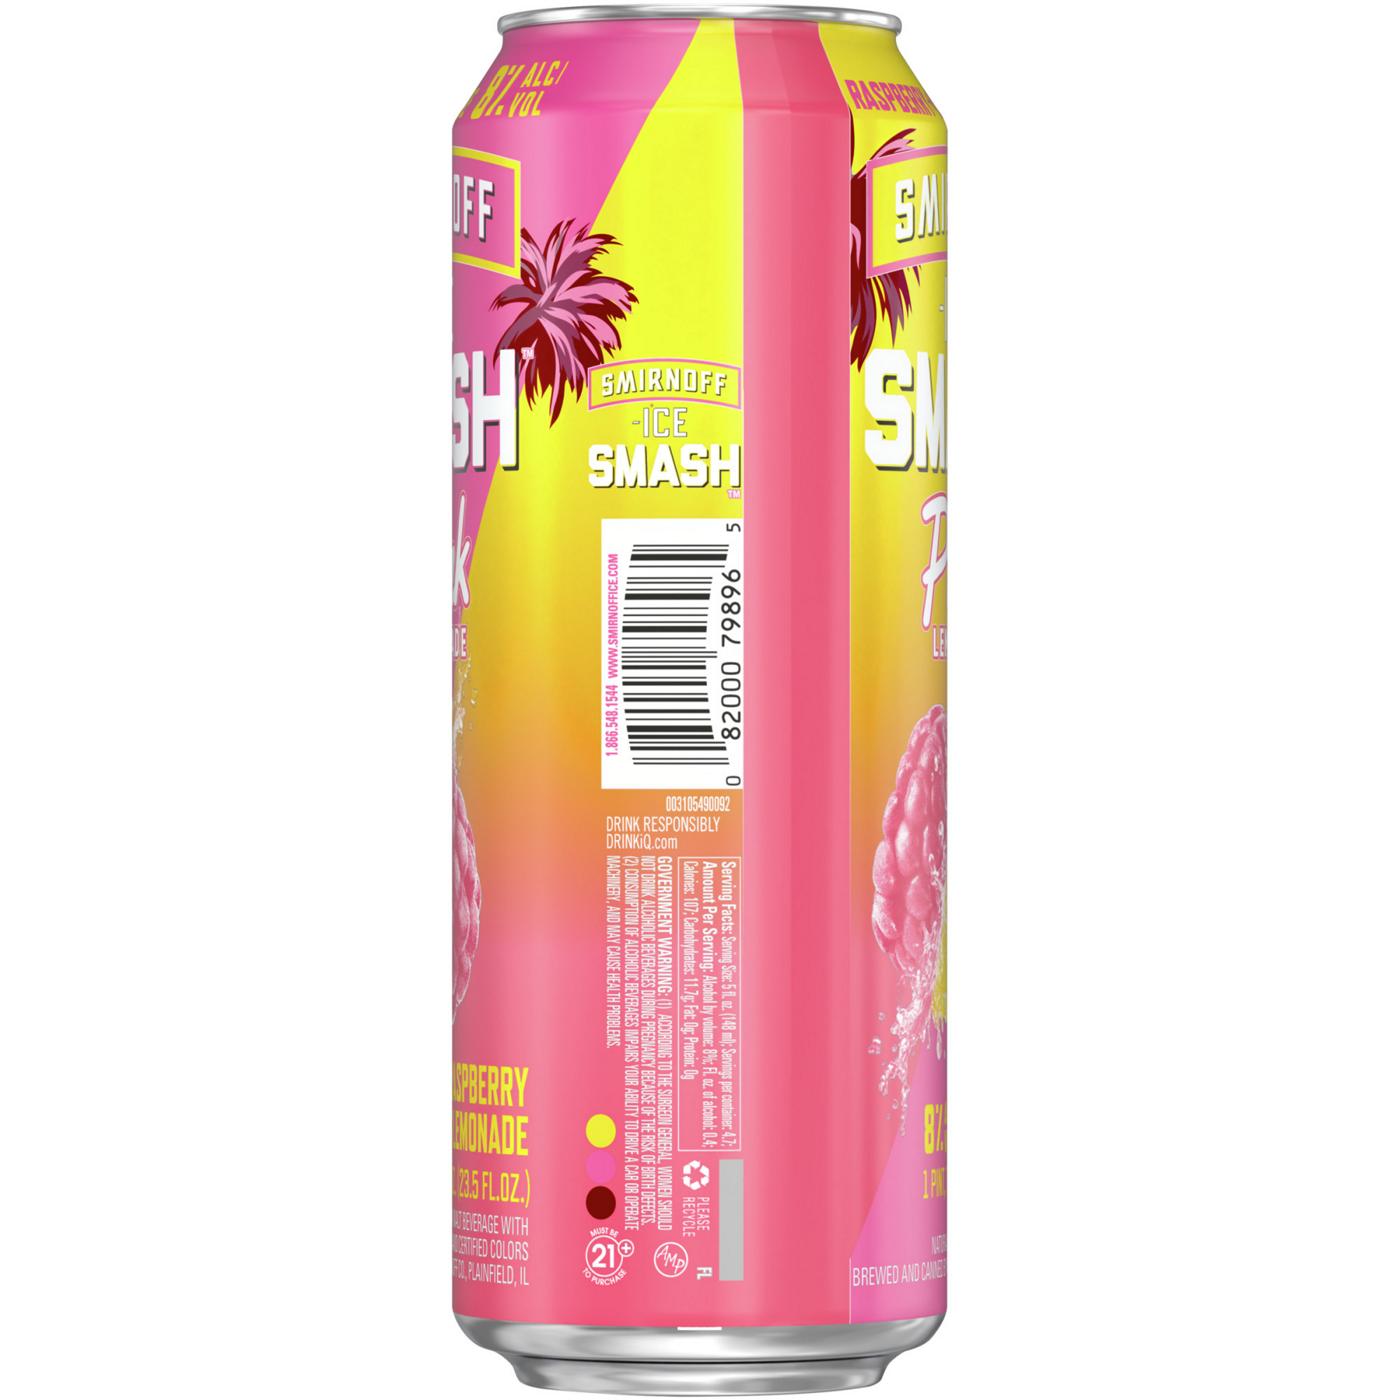 Smirnoff Ice Smash Pink Lemonade; image 3 of 3